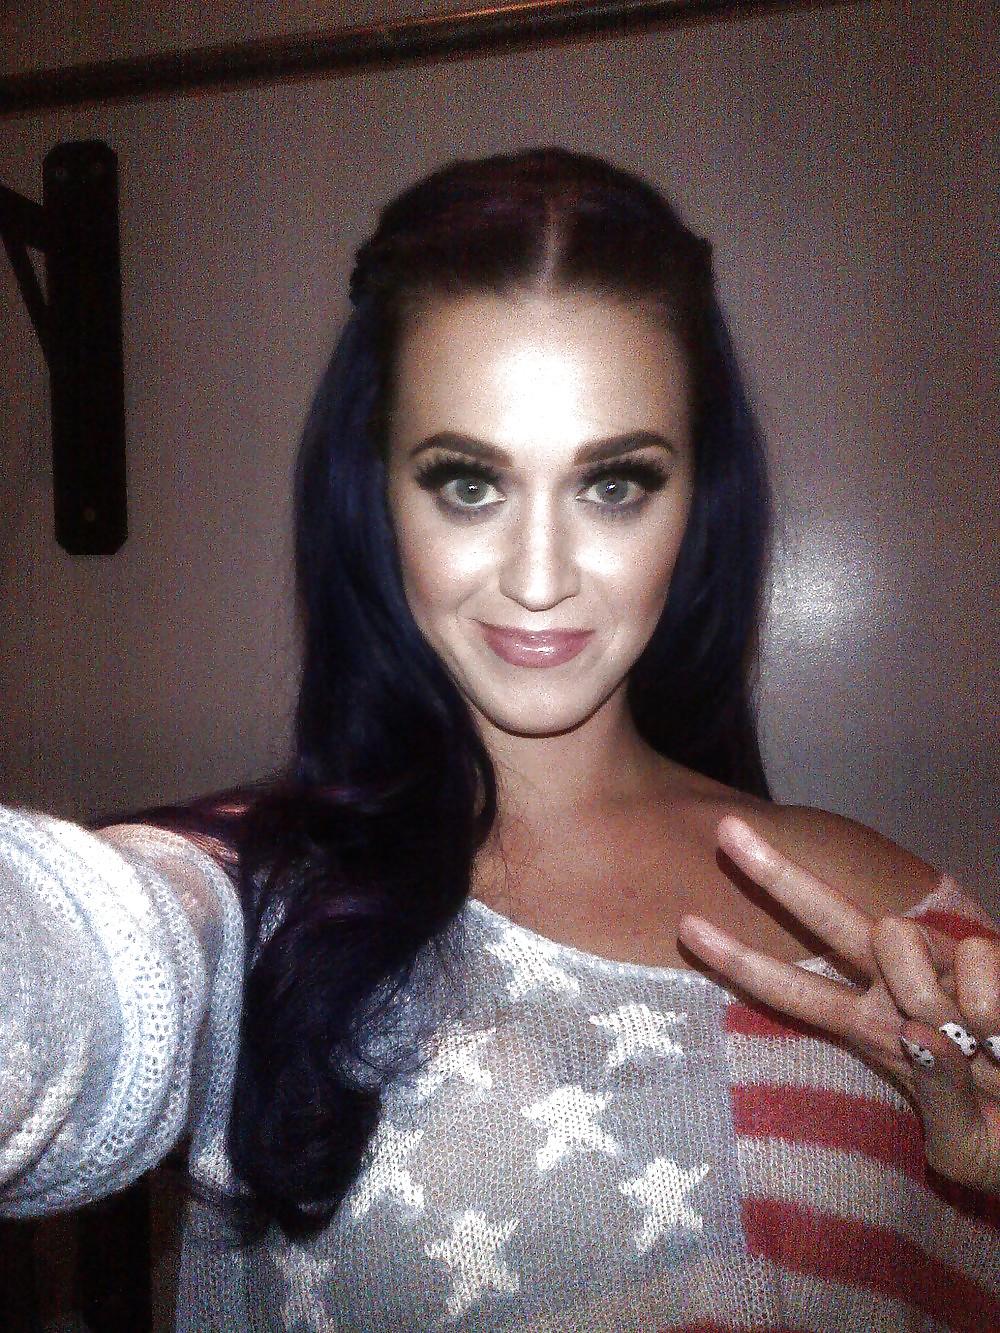 Heiße Schlampe Katy Perry - Besten Bilder! #11424018